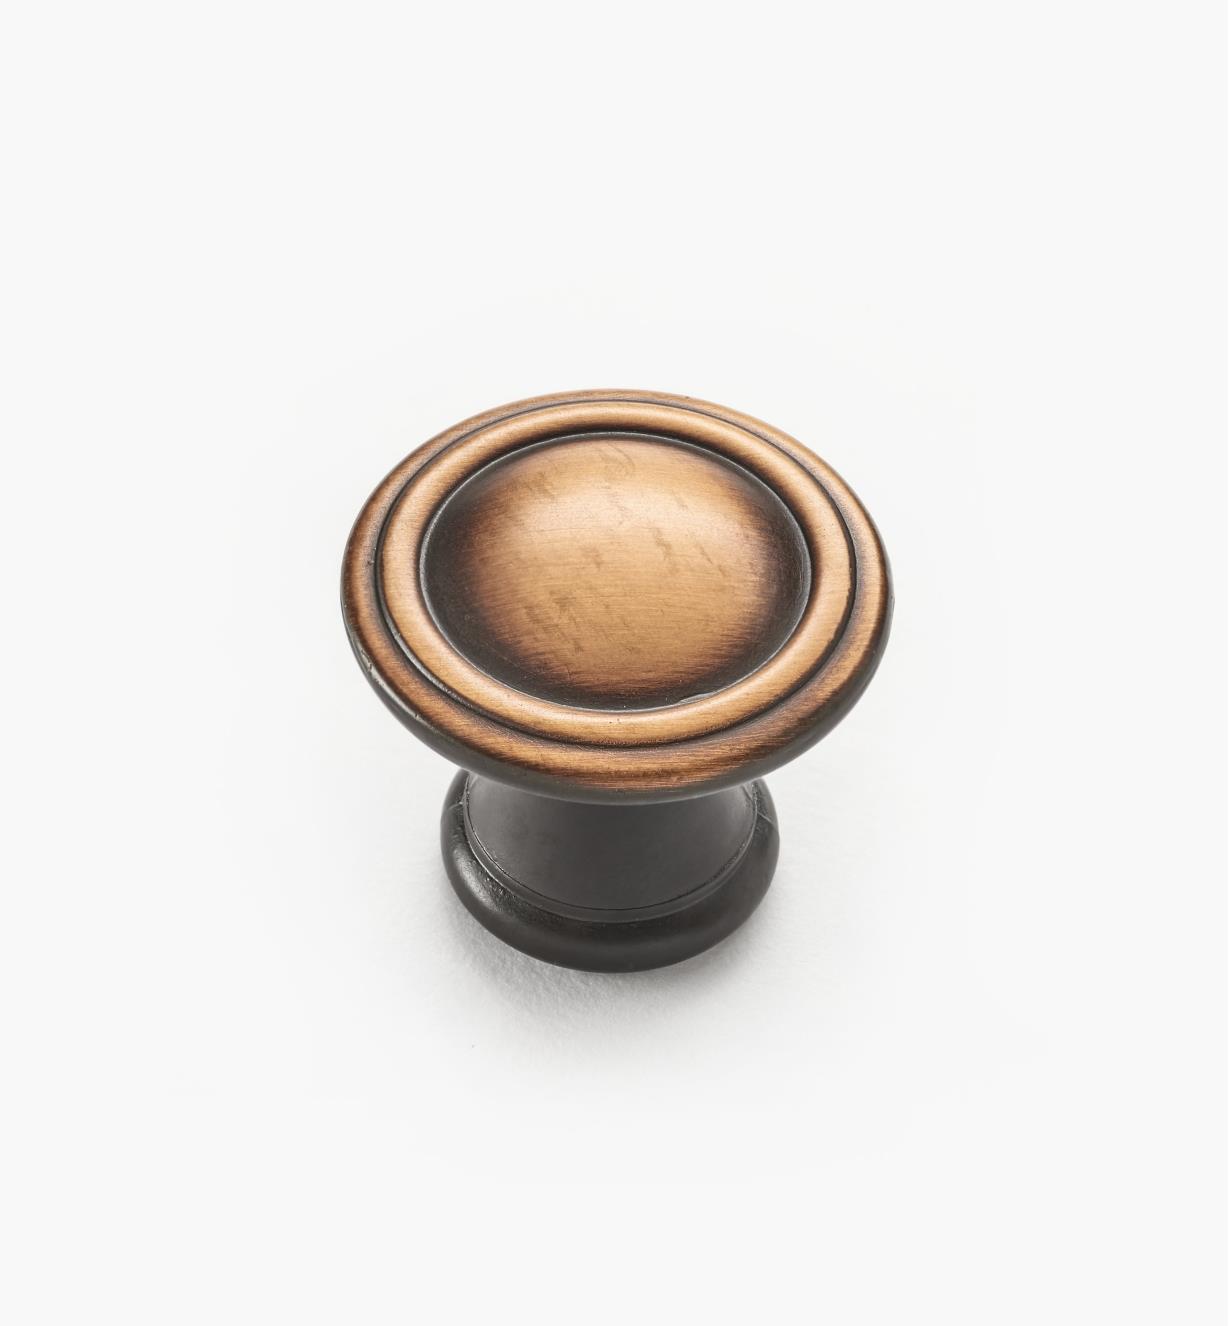 02W4125 - Brushed Antique Copper Knob